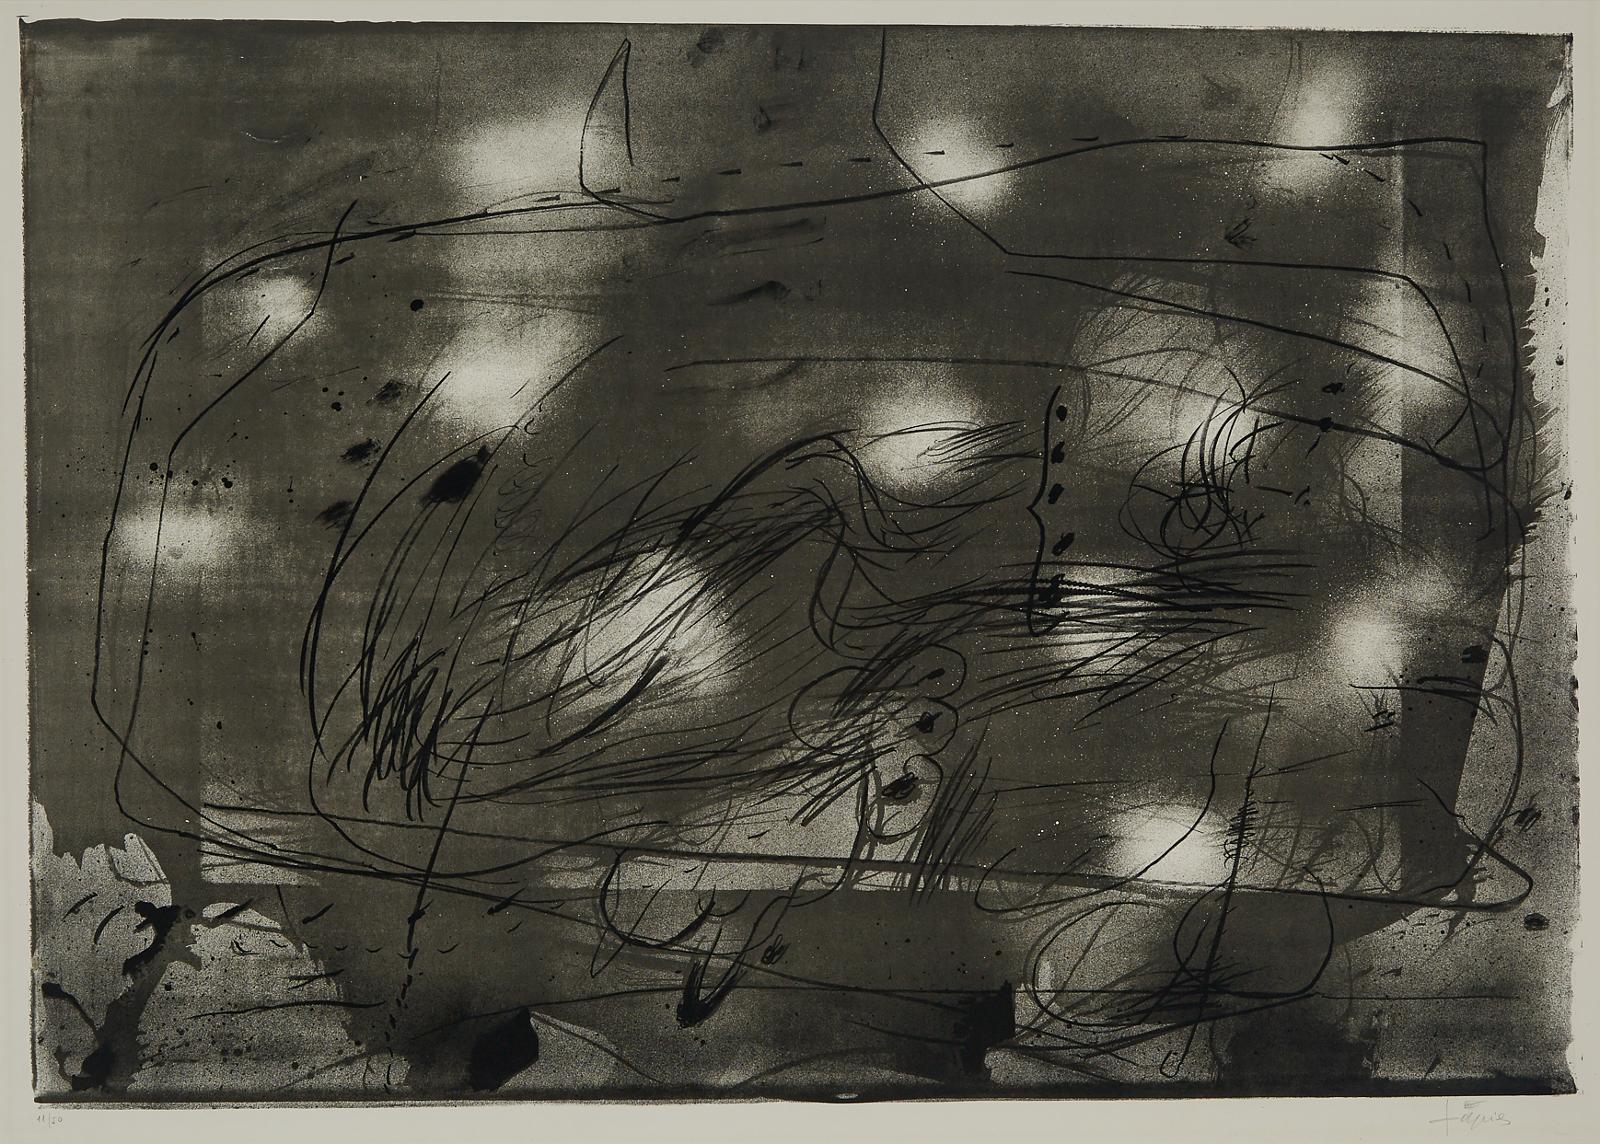 Antoni Tàpies (1923-2012) - Black On White, No. 2 (One Of The 